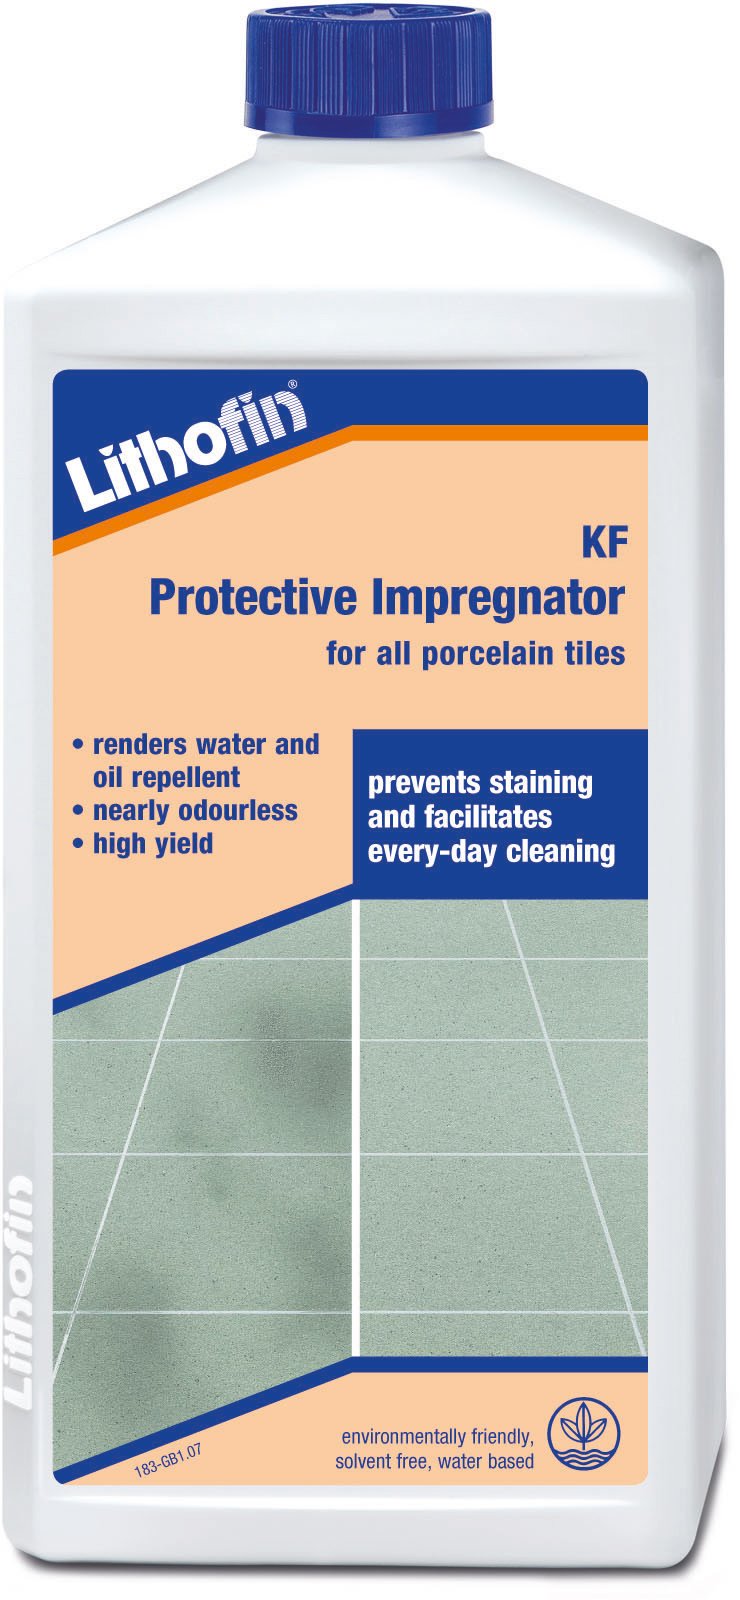 Lithofin kf protective impregnator 